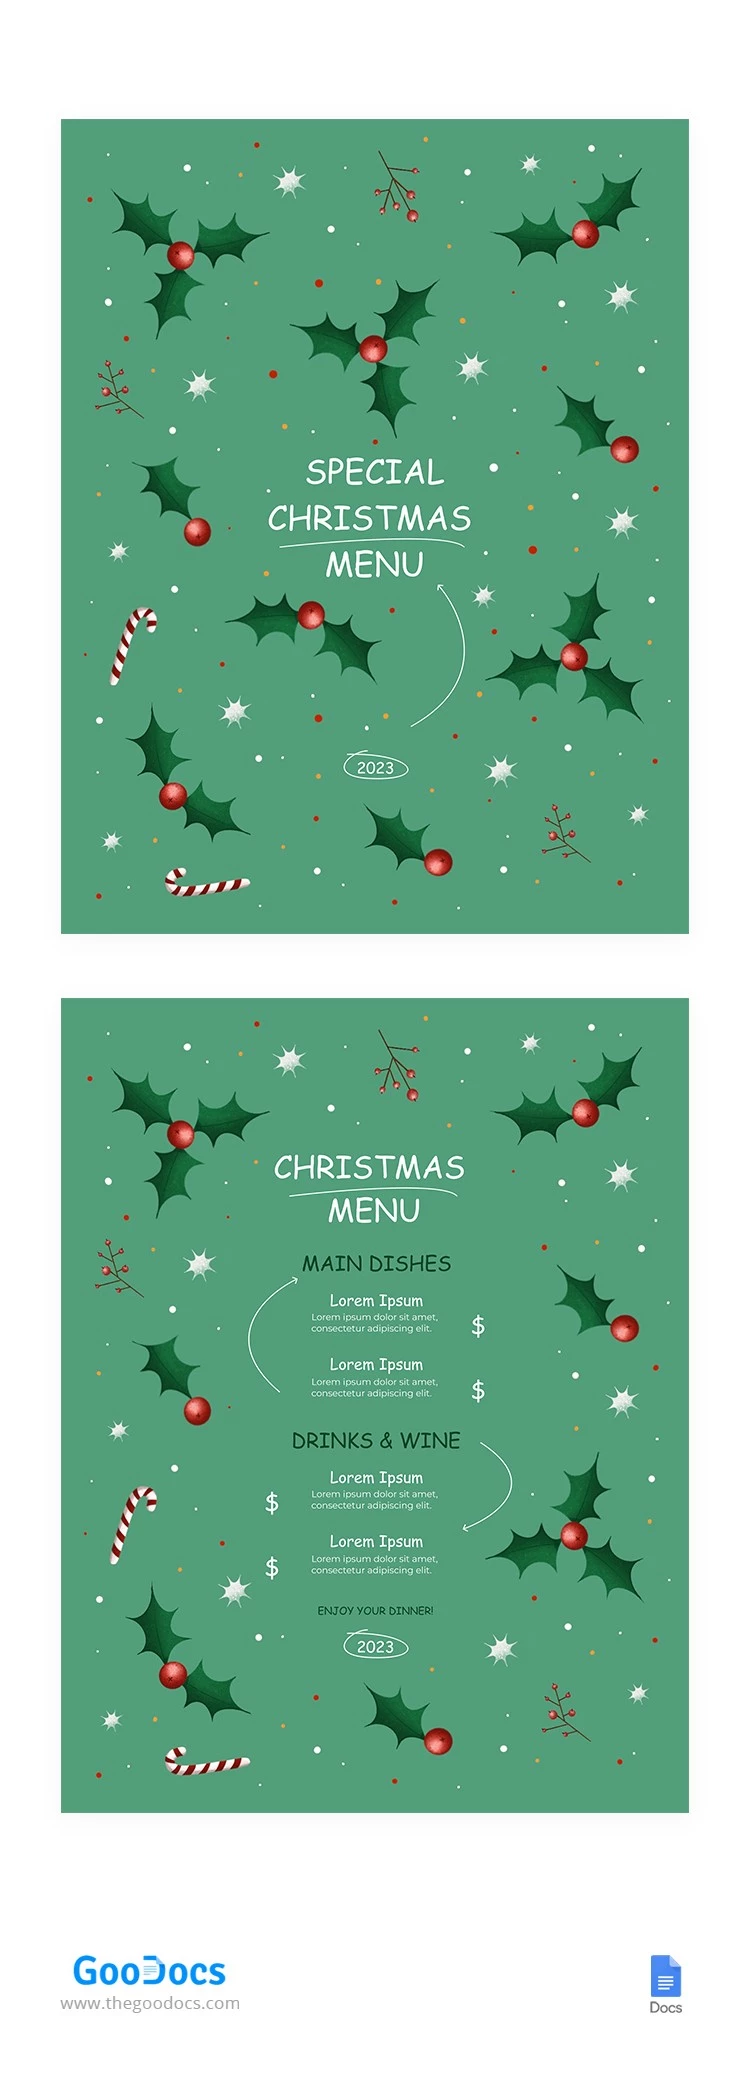 Menu de Noël illustré - free Google Docs Template - 10065002